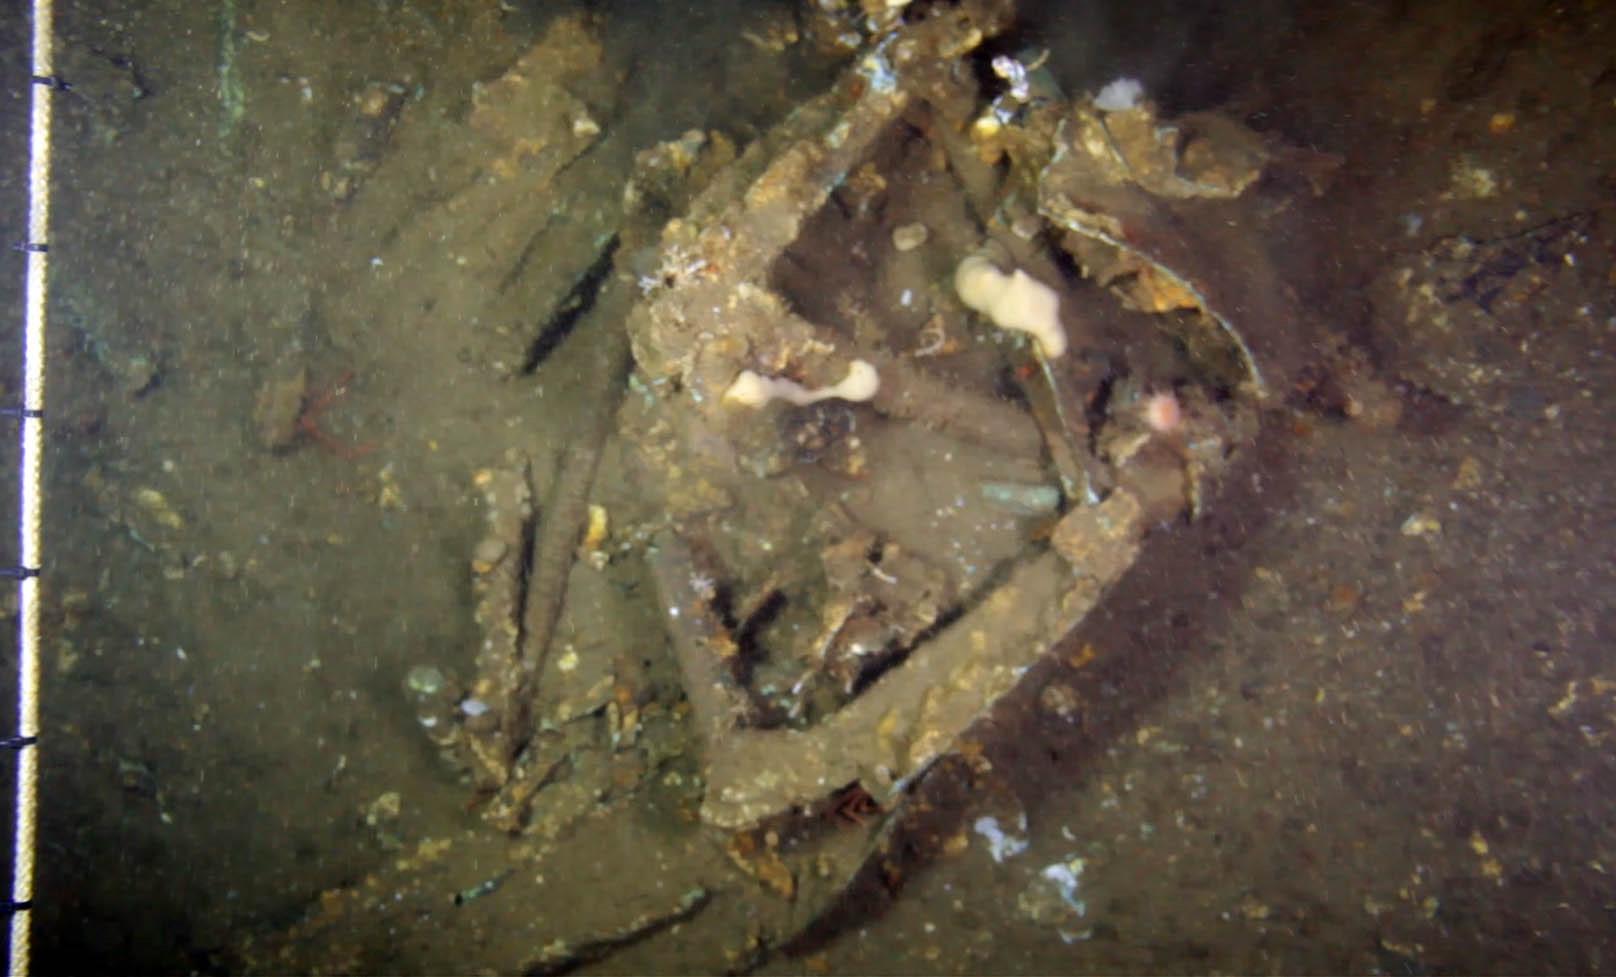 Wreckage of WWII British Short Stirling Bomber Found - Shipwrecks.com ...